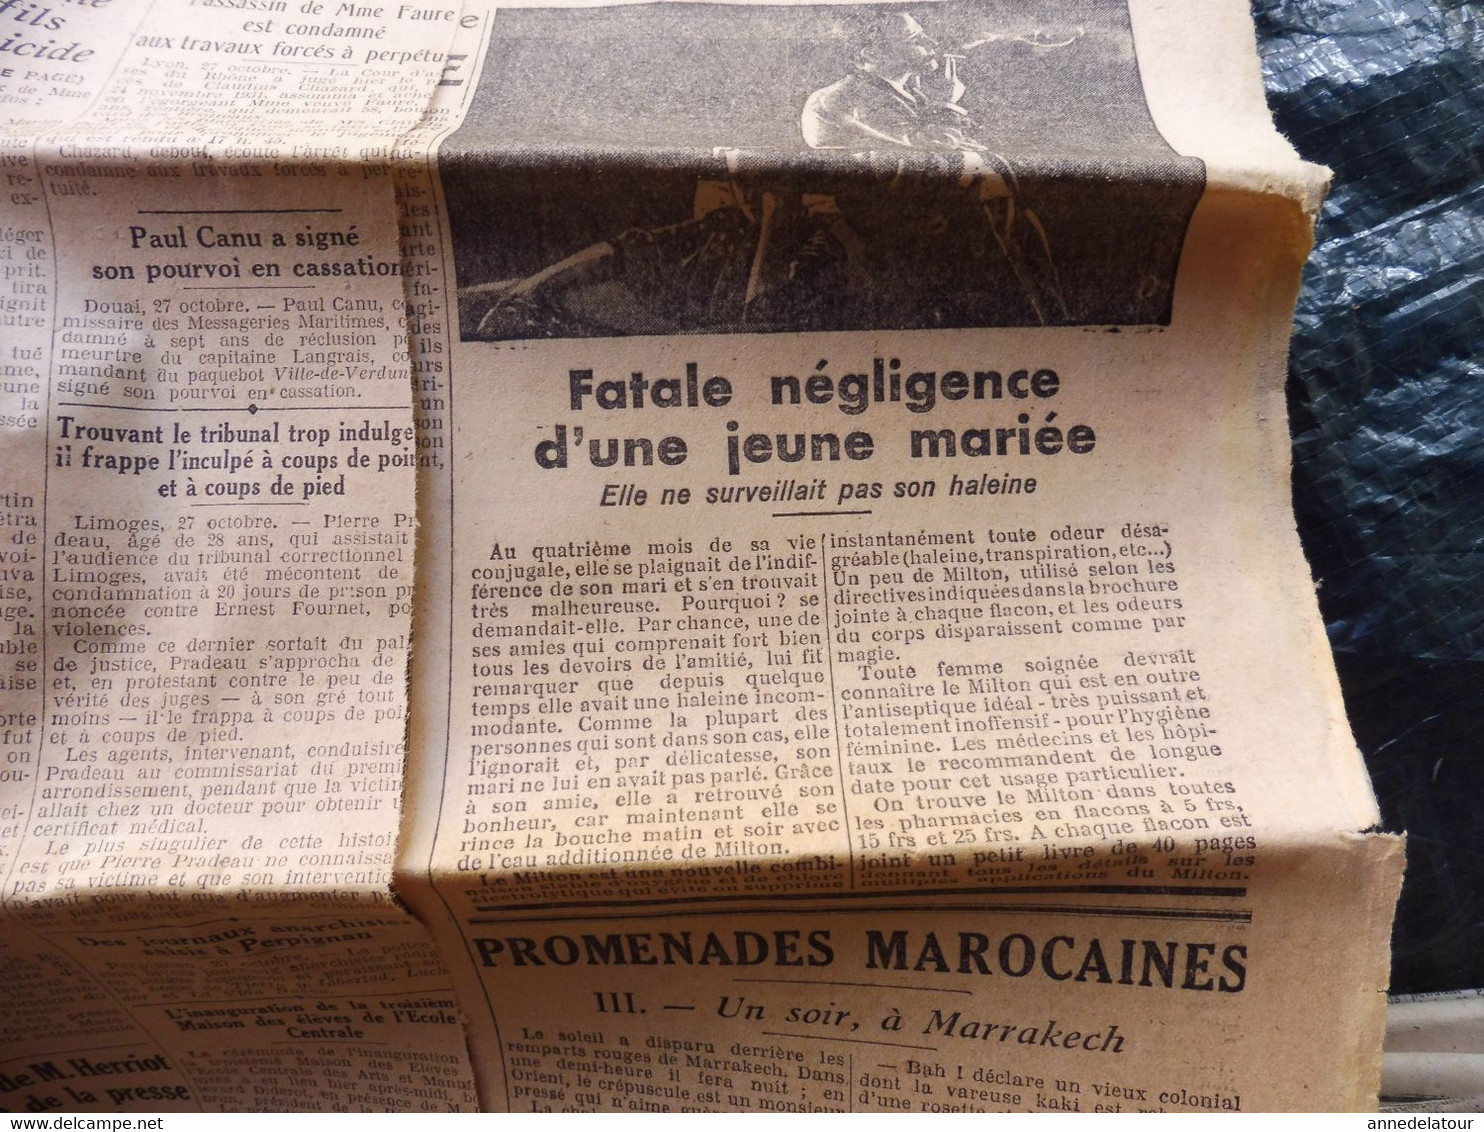 1932  Promenades marocaines ; etc  ( journal L'AMI DU PEUPLE )